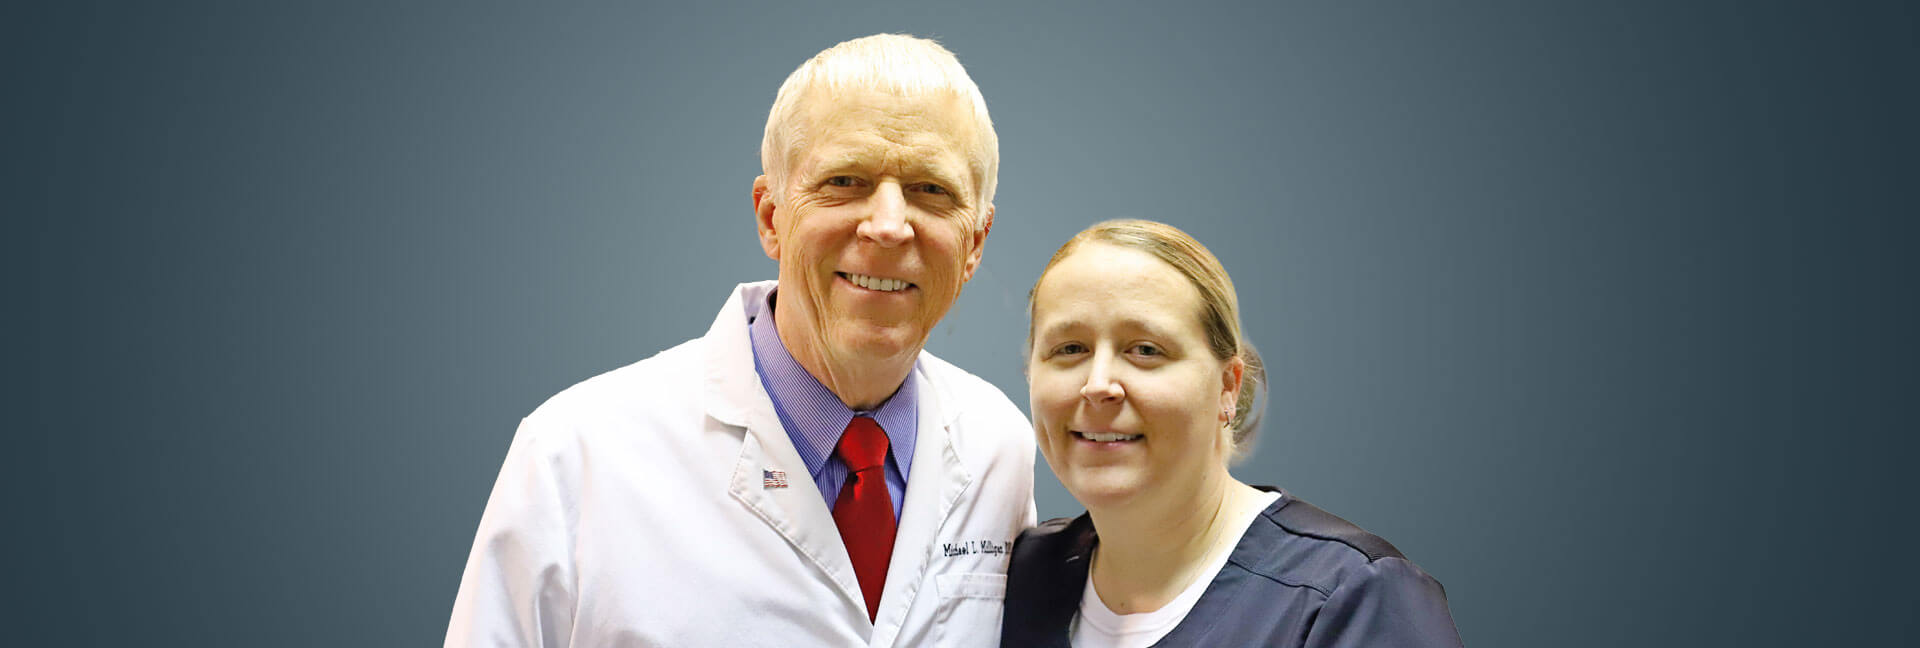 Dr. Mike Milligan & Dr. Marisa Milligan - Dentists Bloomington, IL